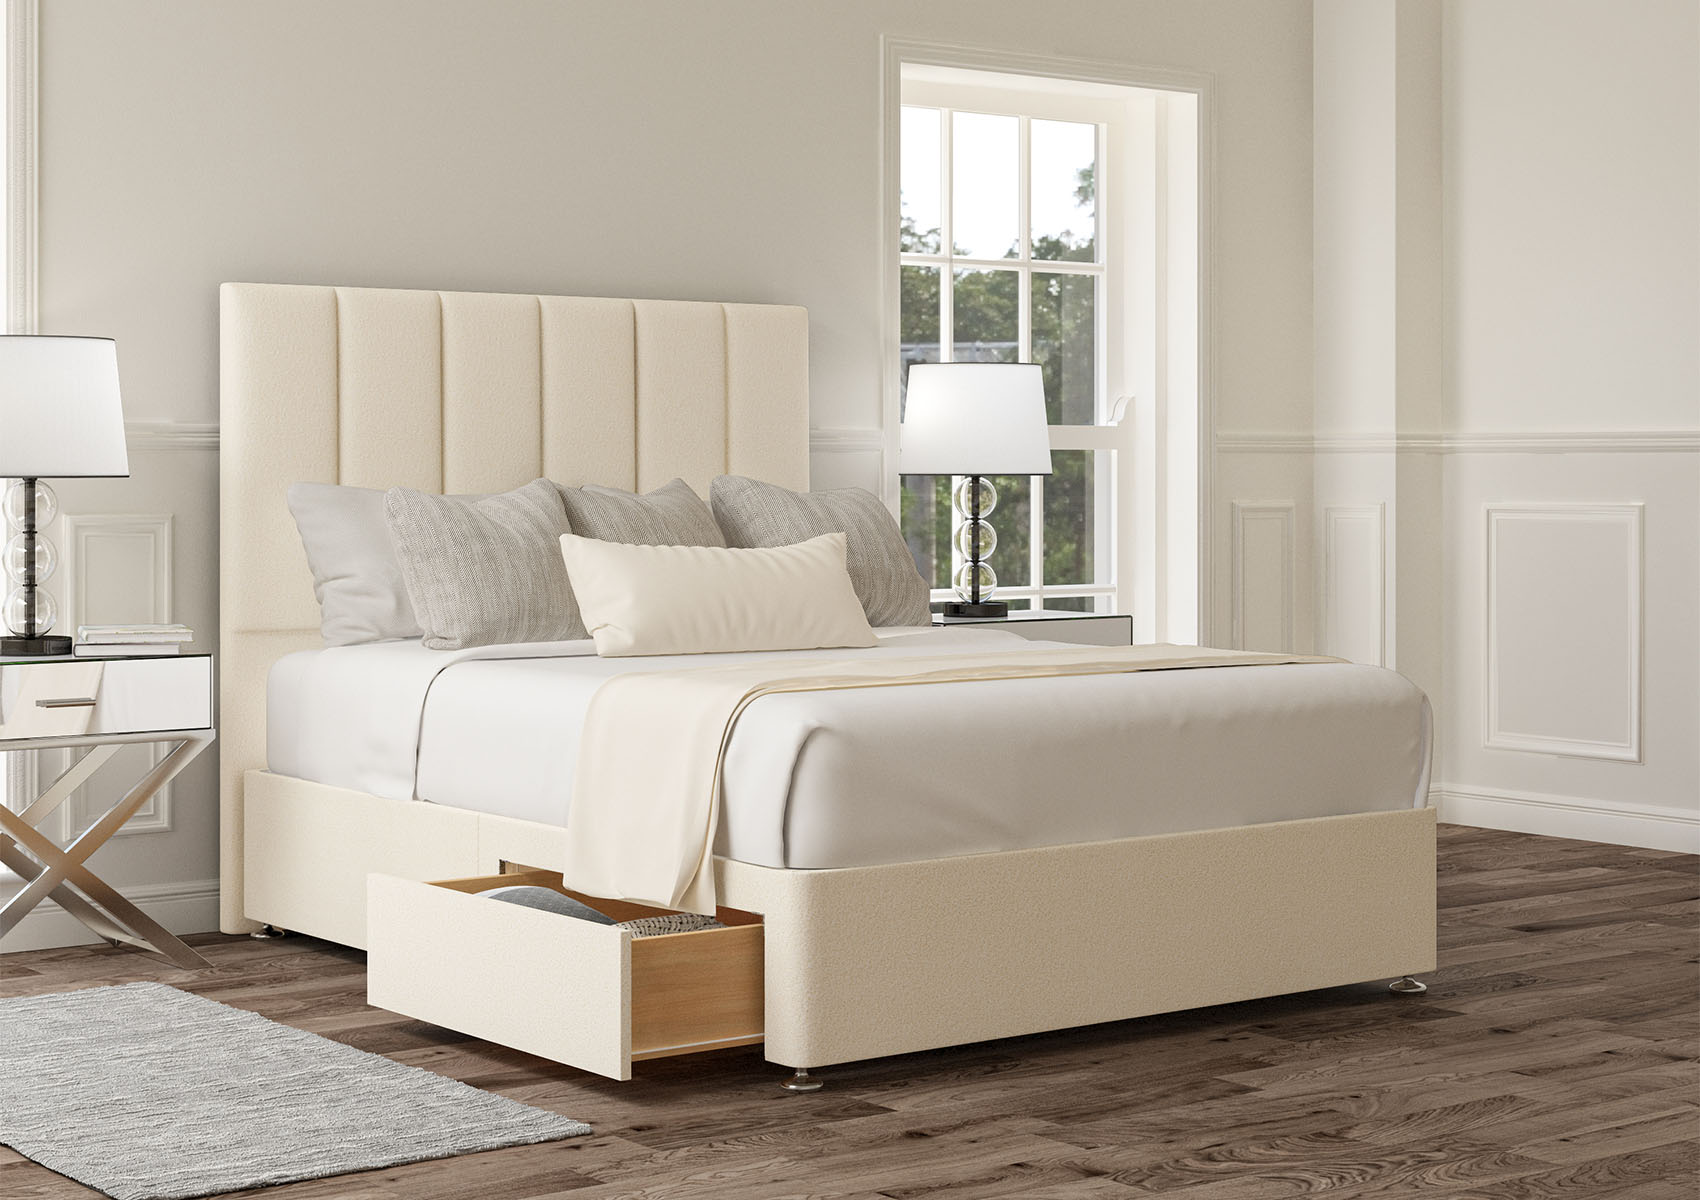 View Empire Heritage Steel Upholstered Single Divan Bed Time4Sleep information